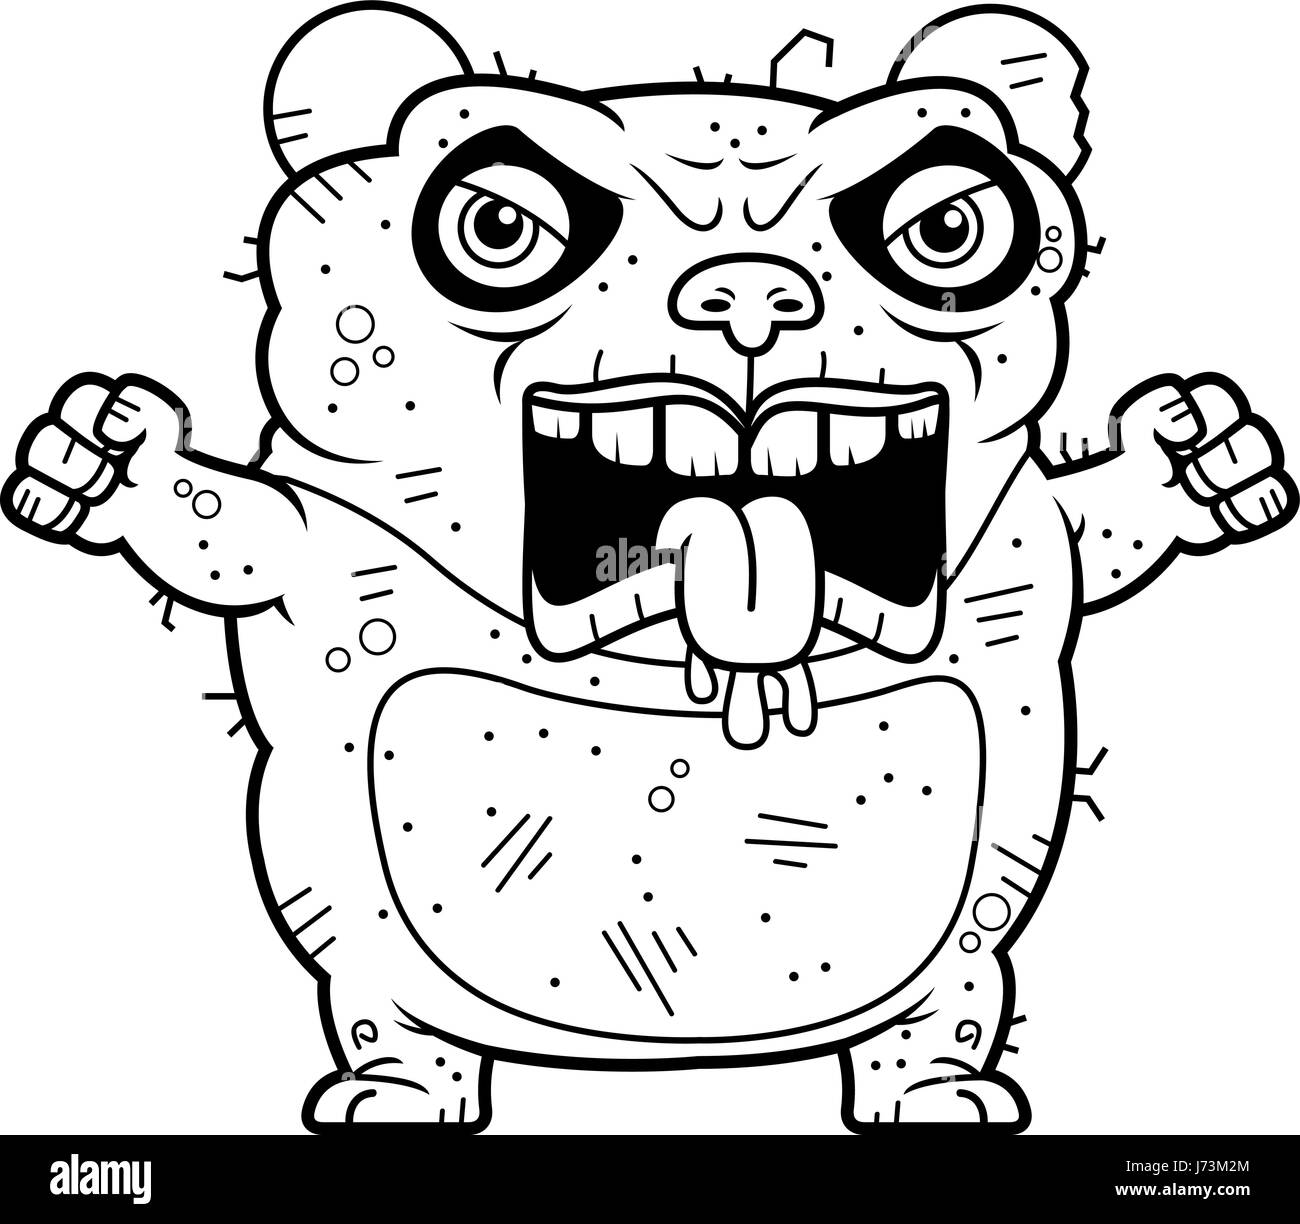 A cartoon illustration of an ugly panda bear looking angry. Stock Vector